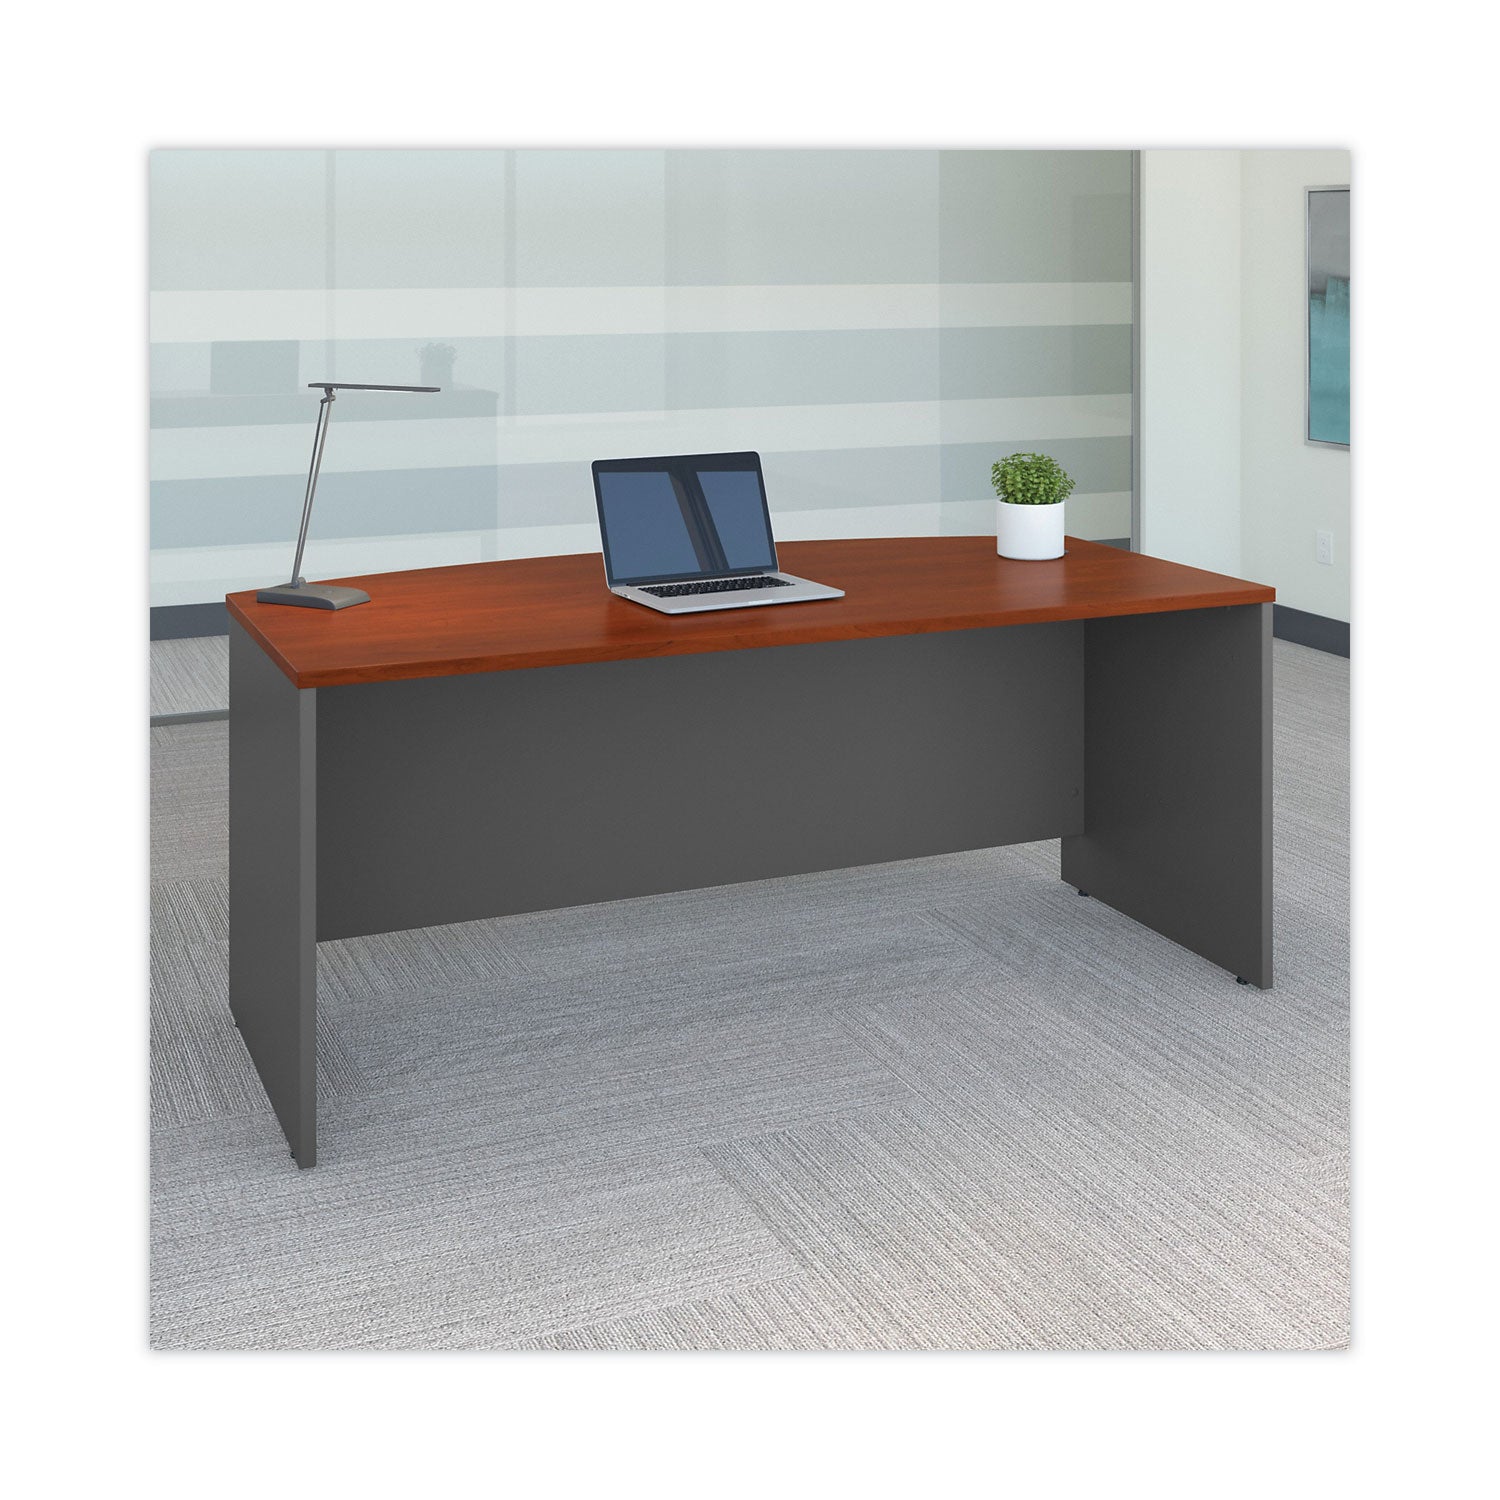 Series C Collection Bow Front Desk, 71.13" x 36.13" x 29.88", Hansen Cherry/Graphite Gray - 